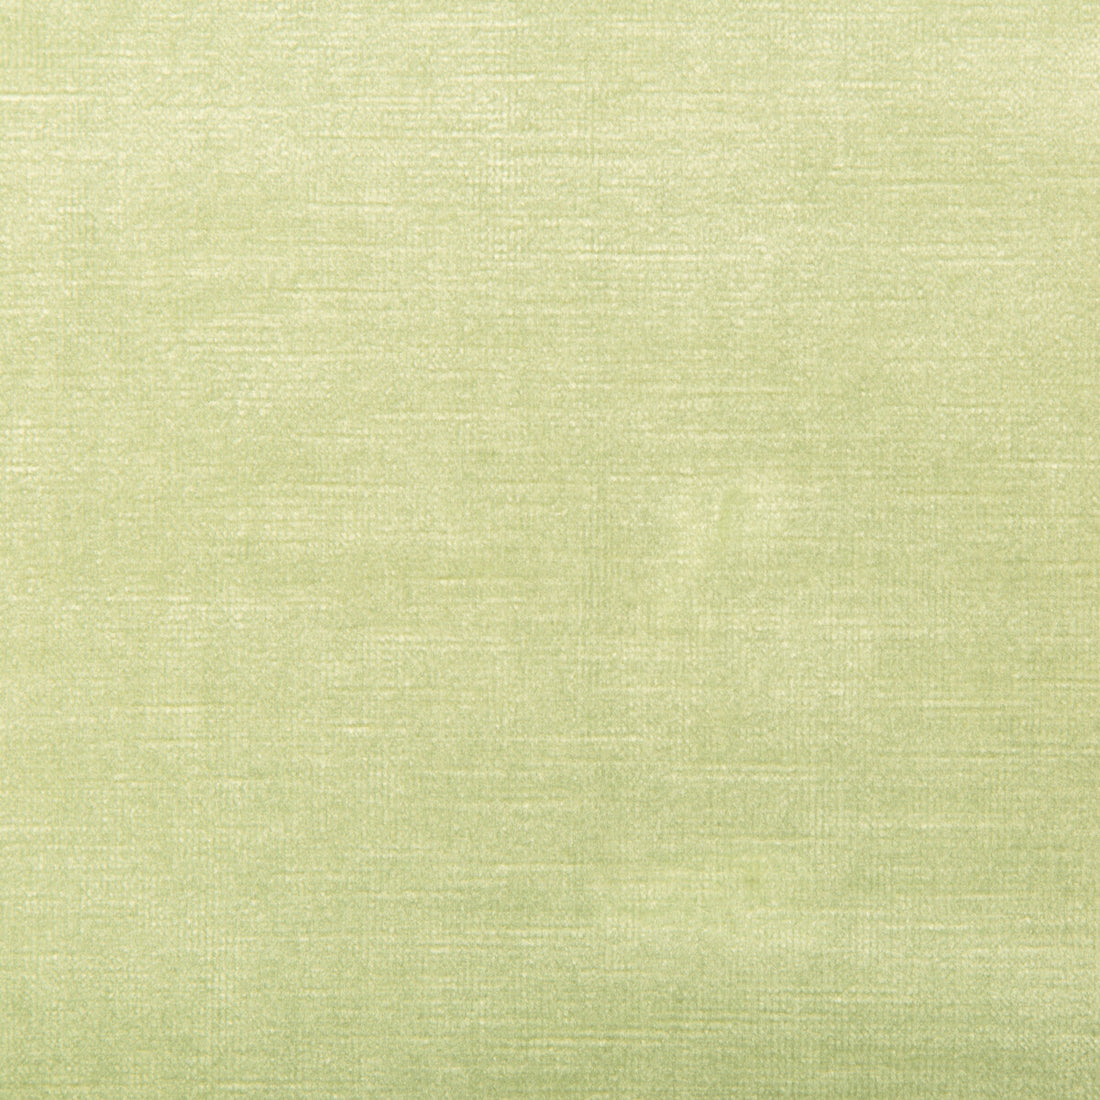 Venetian fabric in lime color - pattern 31326.2323.0 - by Kravet Design